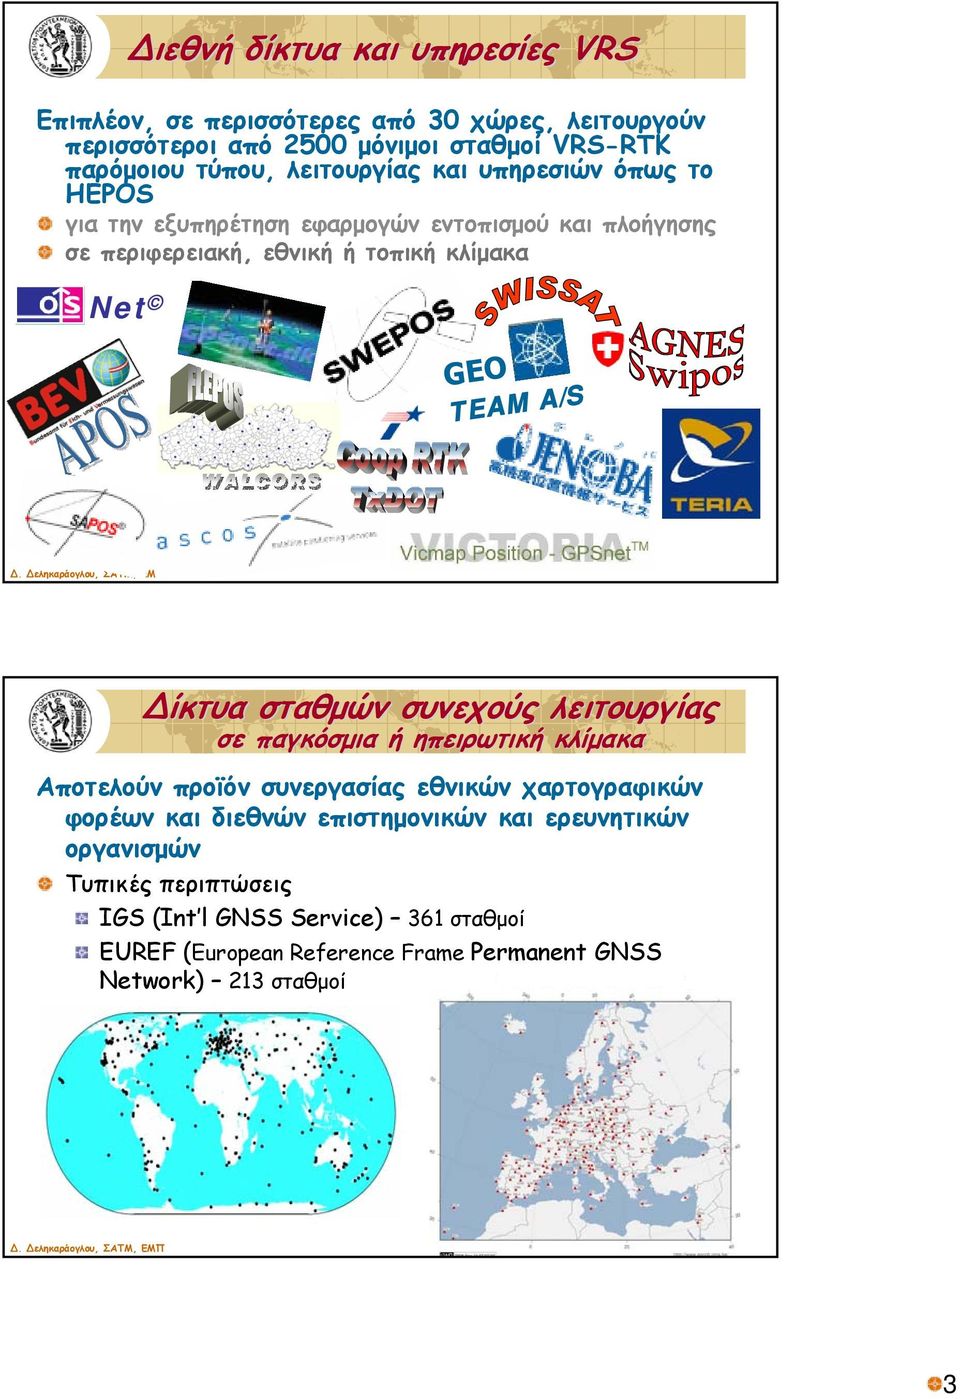 A/S ίκτυα σταθμών συνεχούς λειτουργίας σε παγκόσμια ή ηπειρωτική κλίμακα Αποτελούν προϊόν συνεργασίας εθνικών χαρτογραφικών φορέων και διεθνών